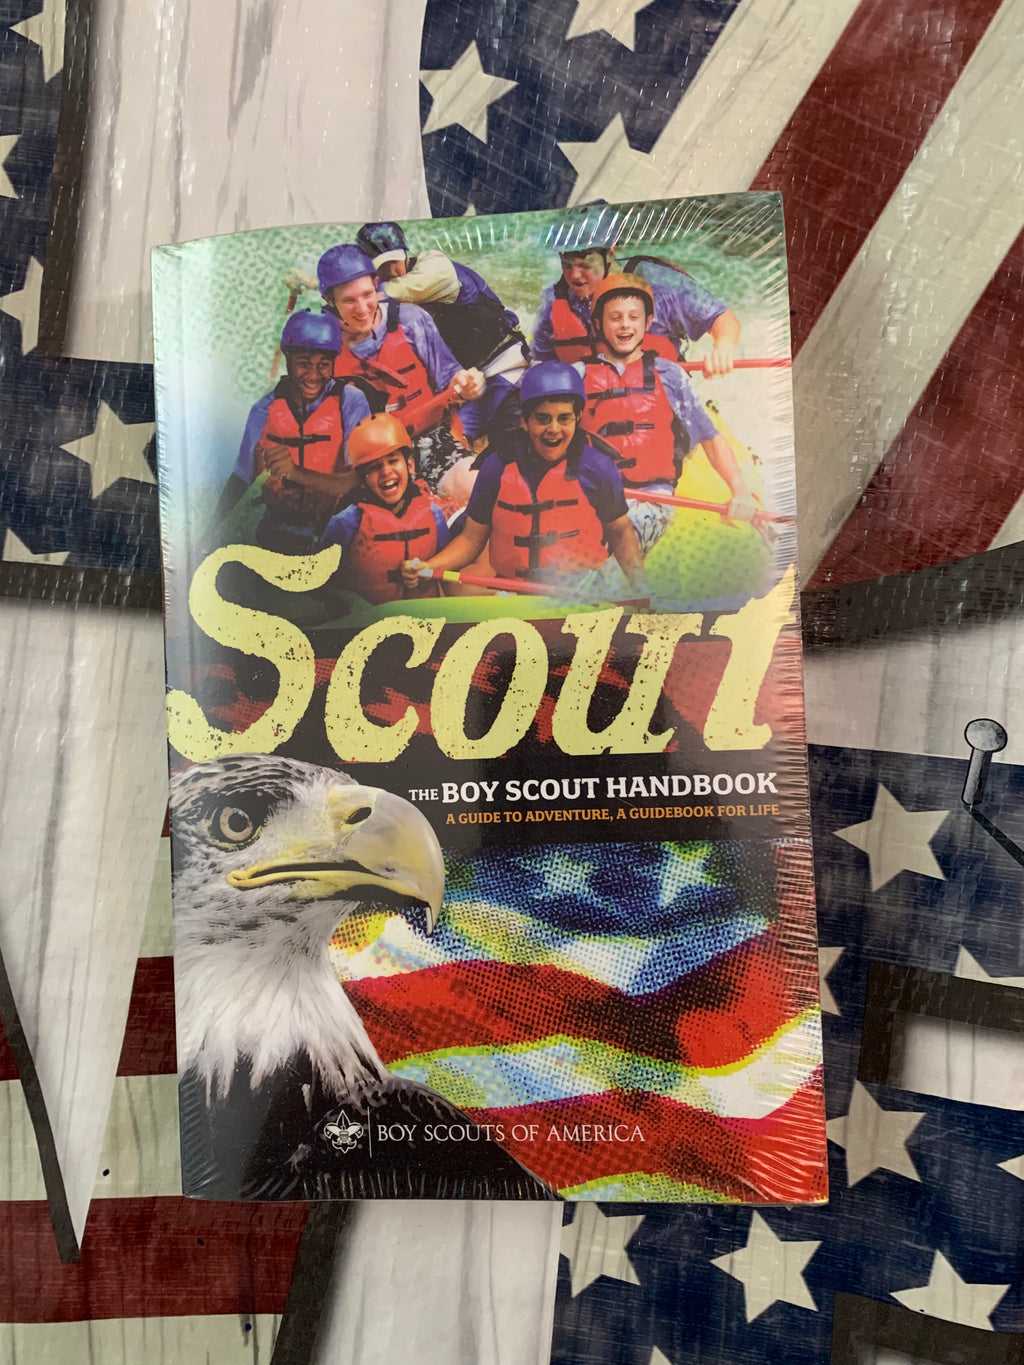 Scout: The Boy Scout Handbook